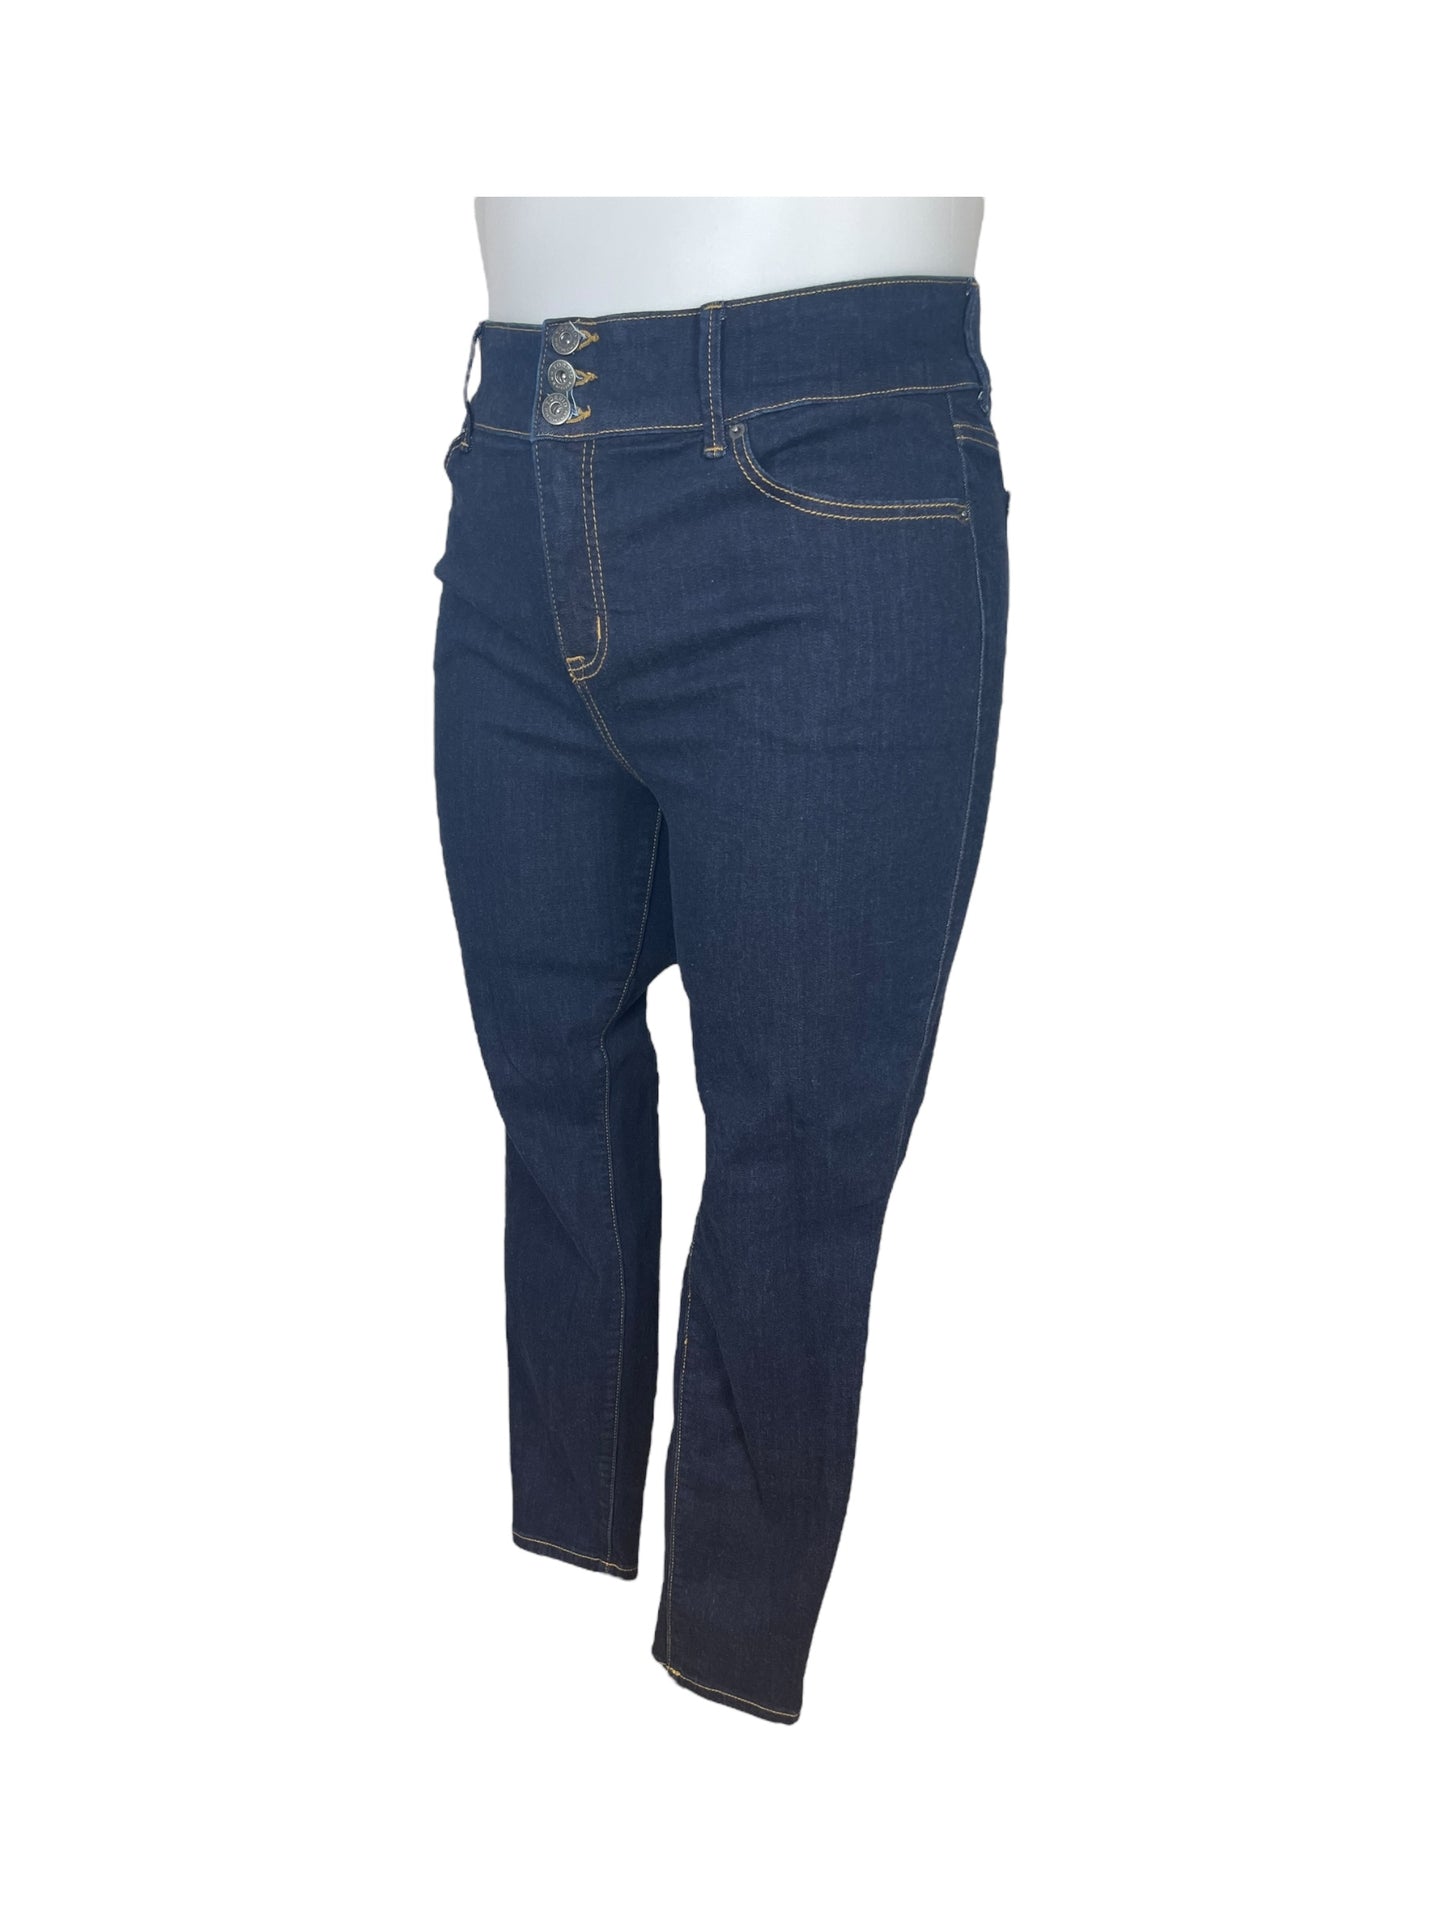 Dark Blue Denim Jeans (22R)